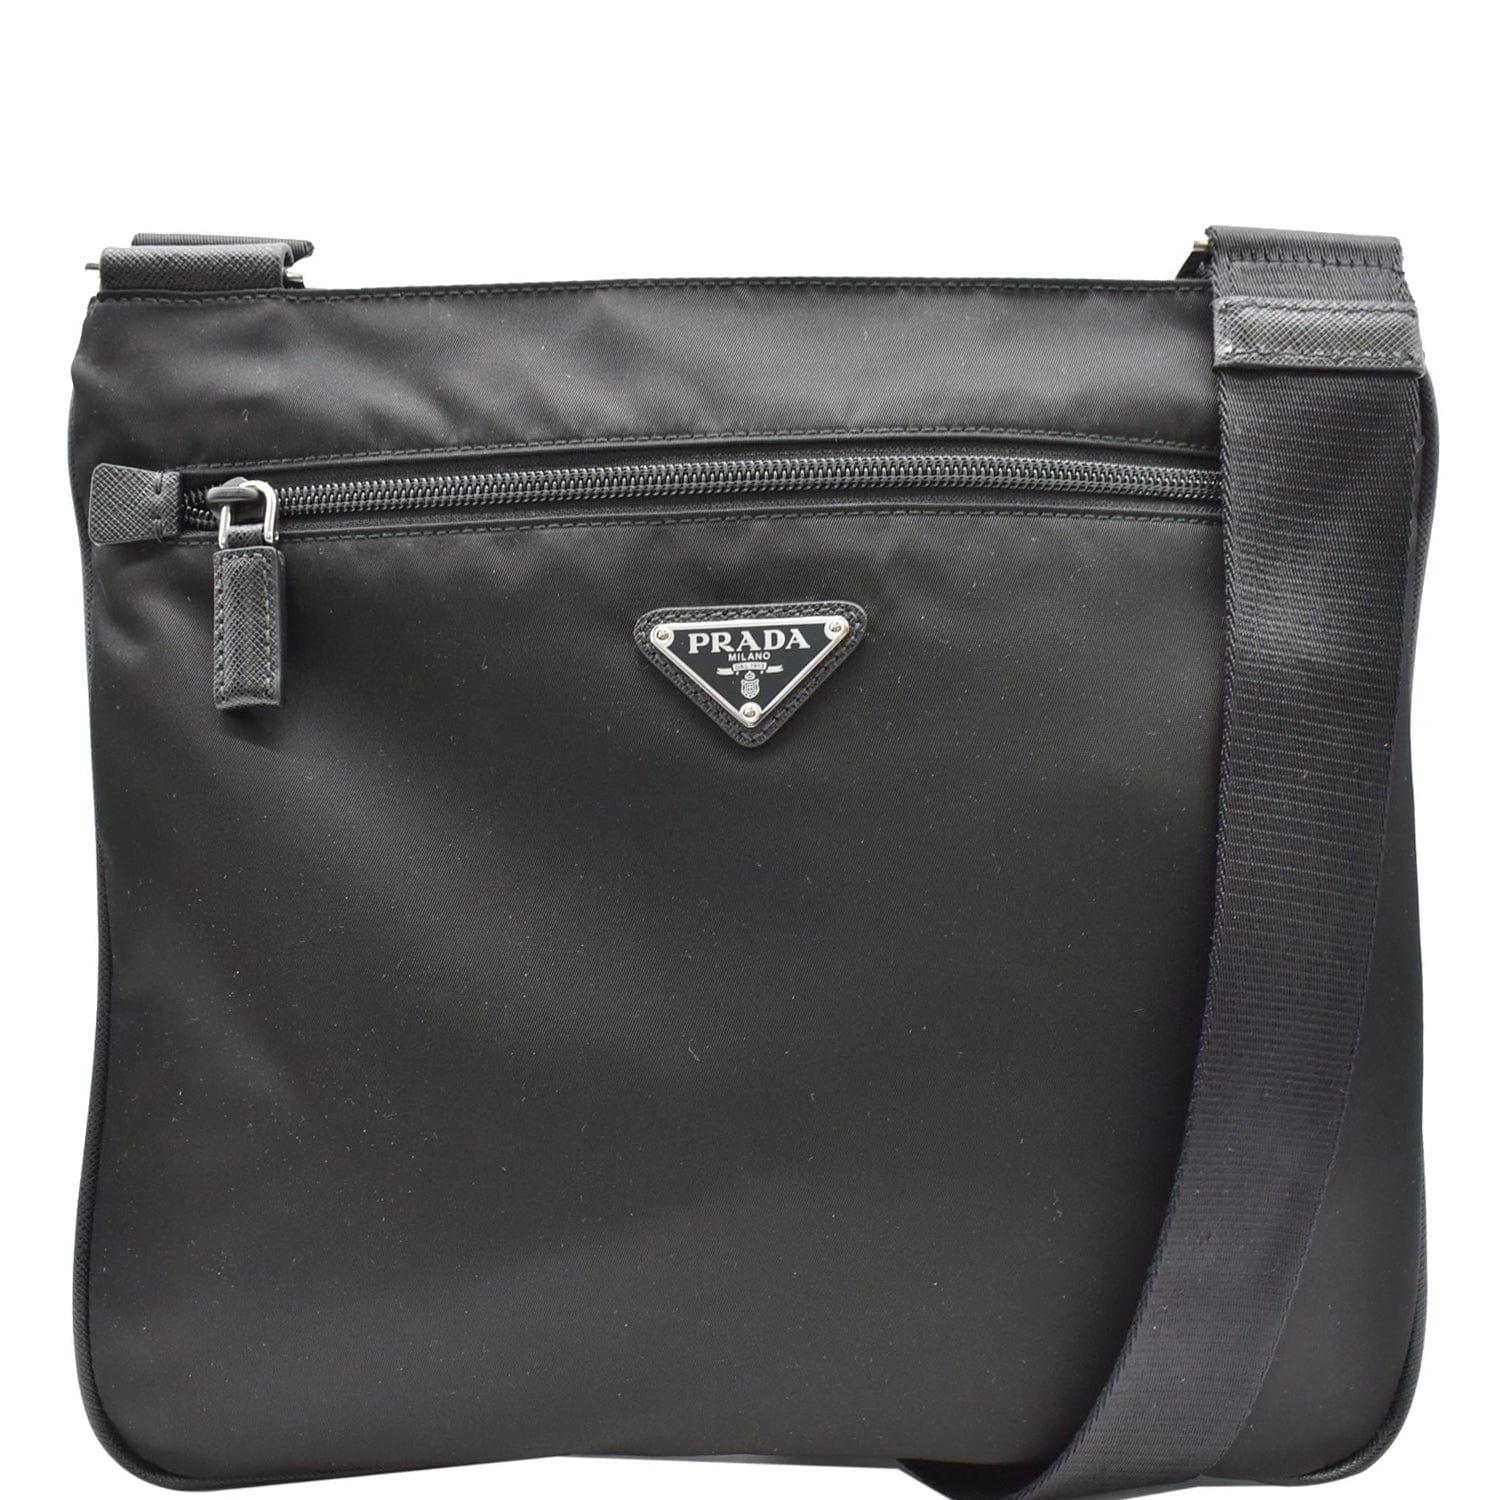 3 ways to style the black saffiano leather Prada Re-Edition purse🖤 wh, Prada Nylon Bag